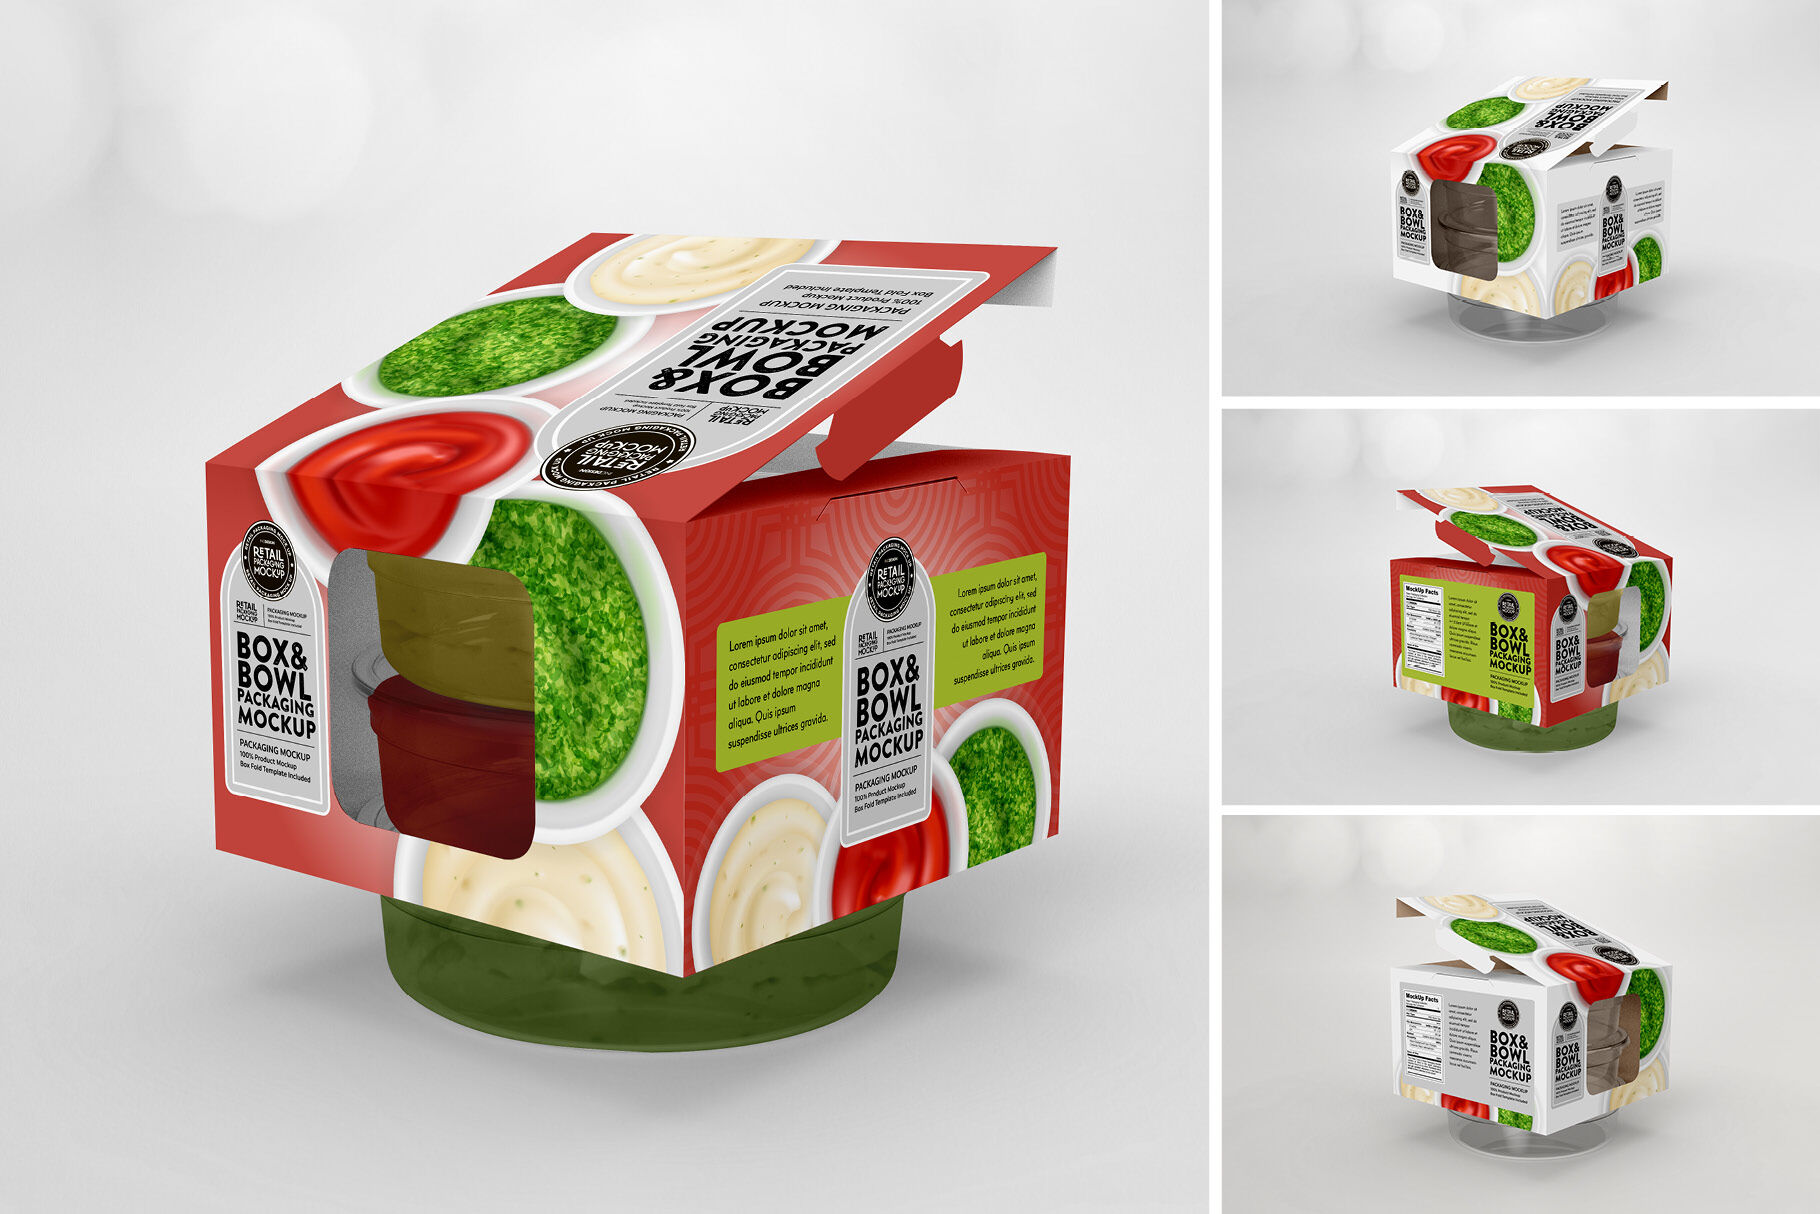 Box And Bowl Packaging Mockup By Inc Design Studio Thehungryjpeg Com